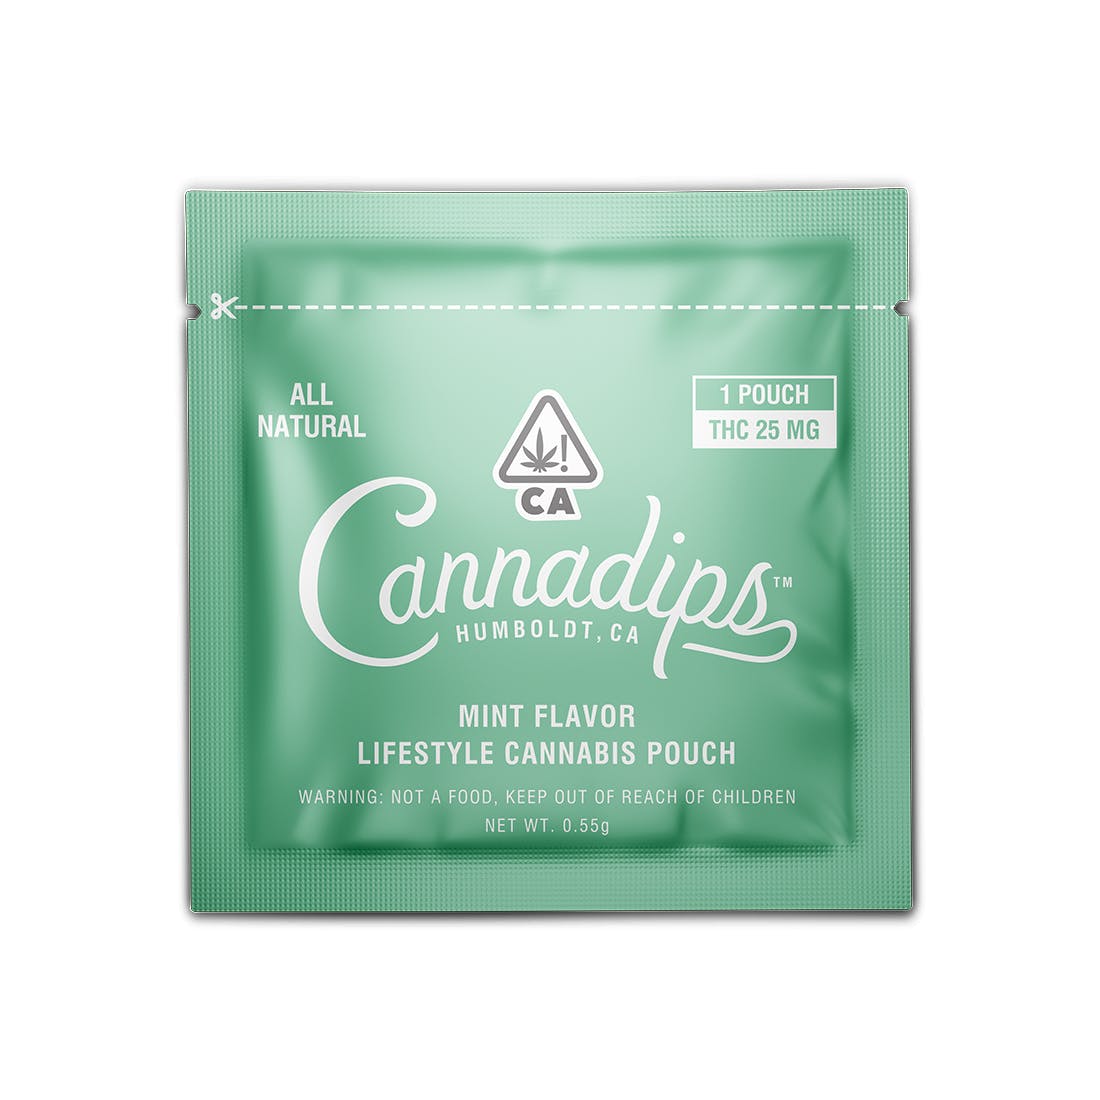 Cannadips Mint Flavor Lifestyle Cannabis Pouch